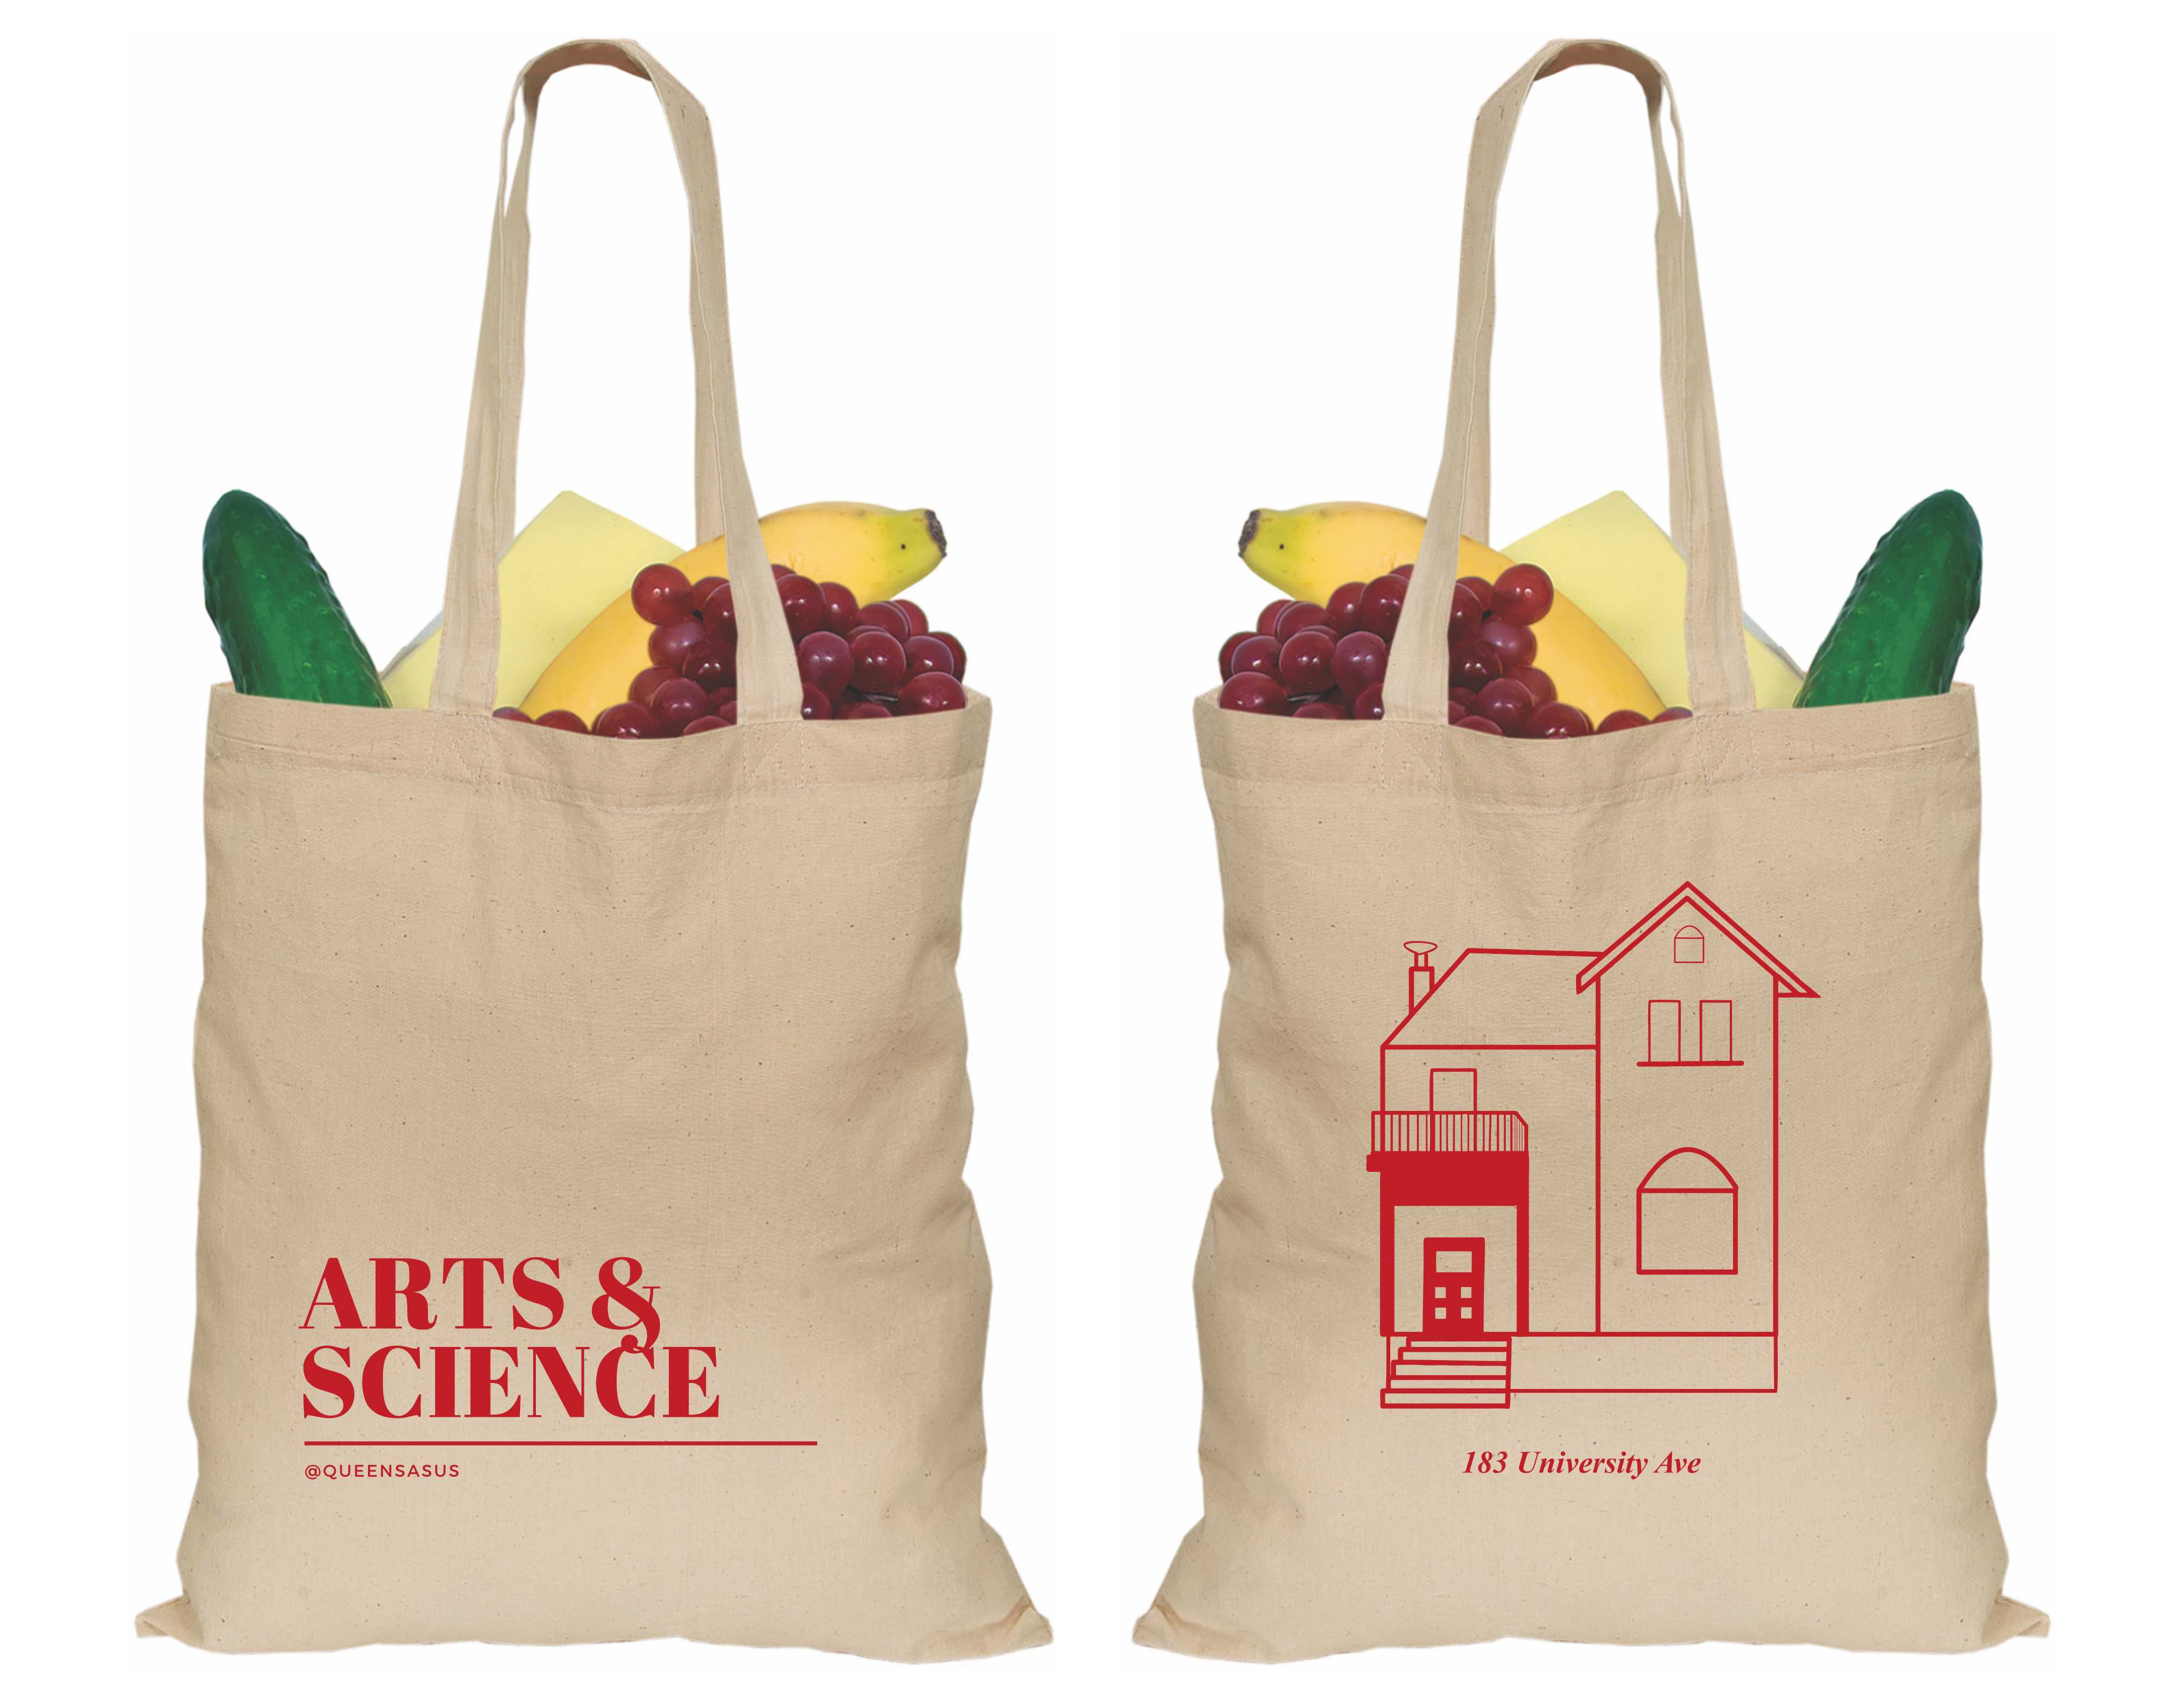 Arts & Science Tote Bag – The Arts & Science Undergraduate